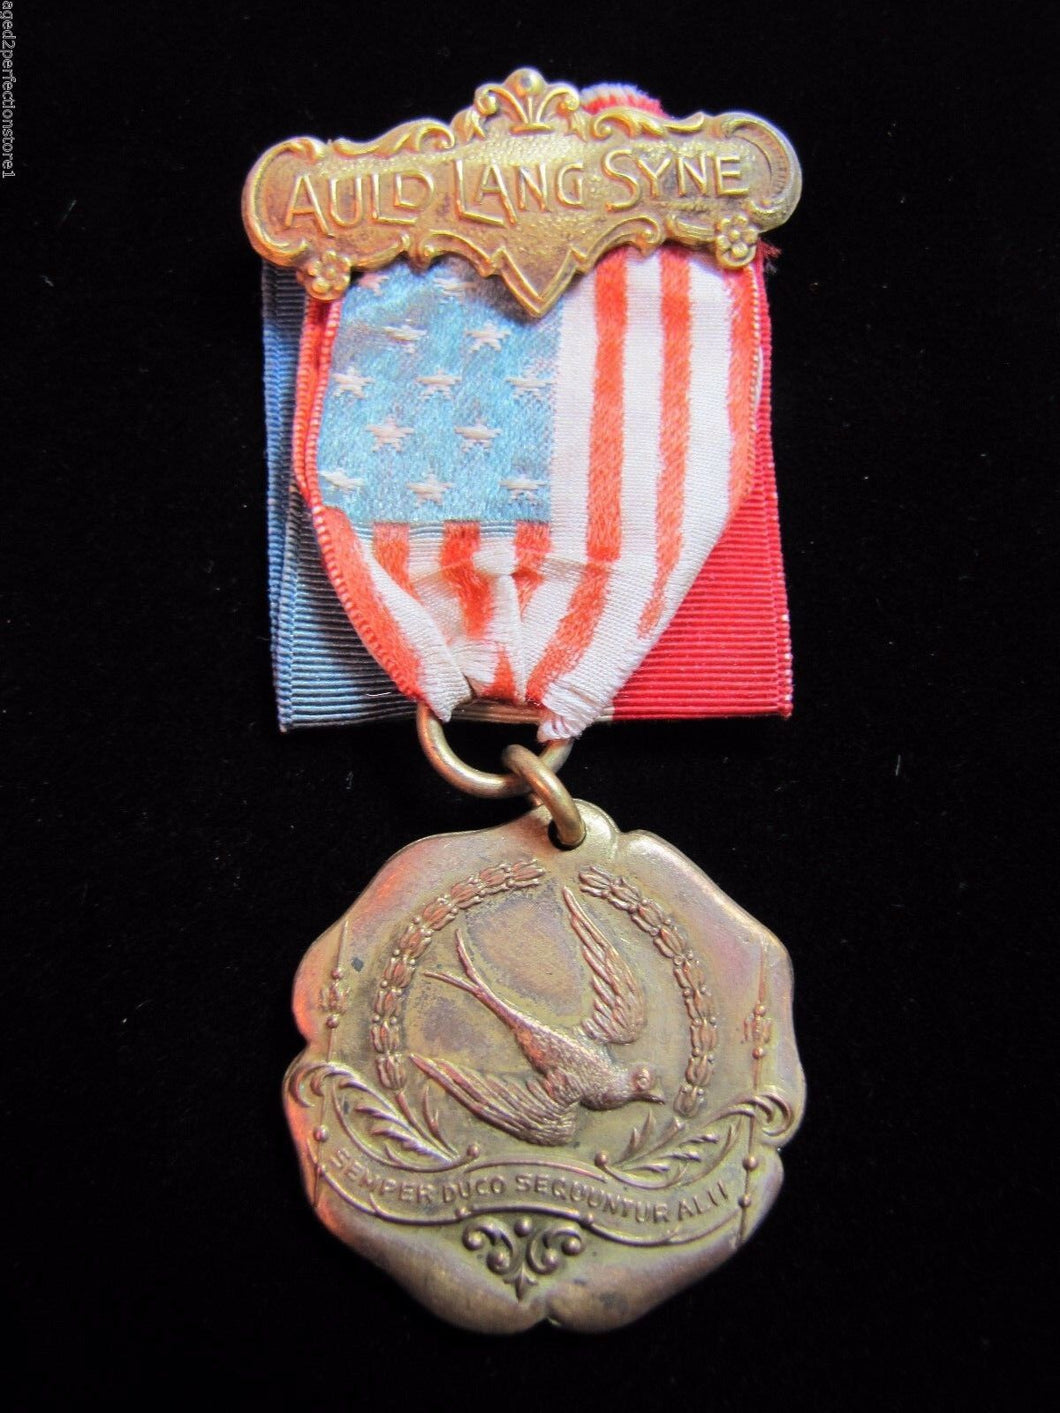 1883 1912 CAFE MARTIN NEW YORK Souvenir Medallion Flag Ribbon Dieges Clust NY